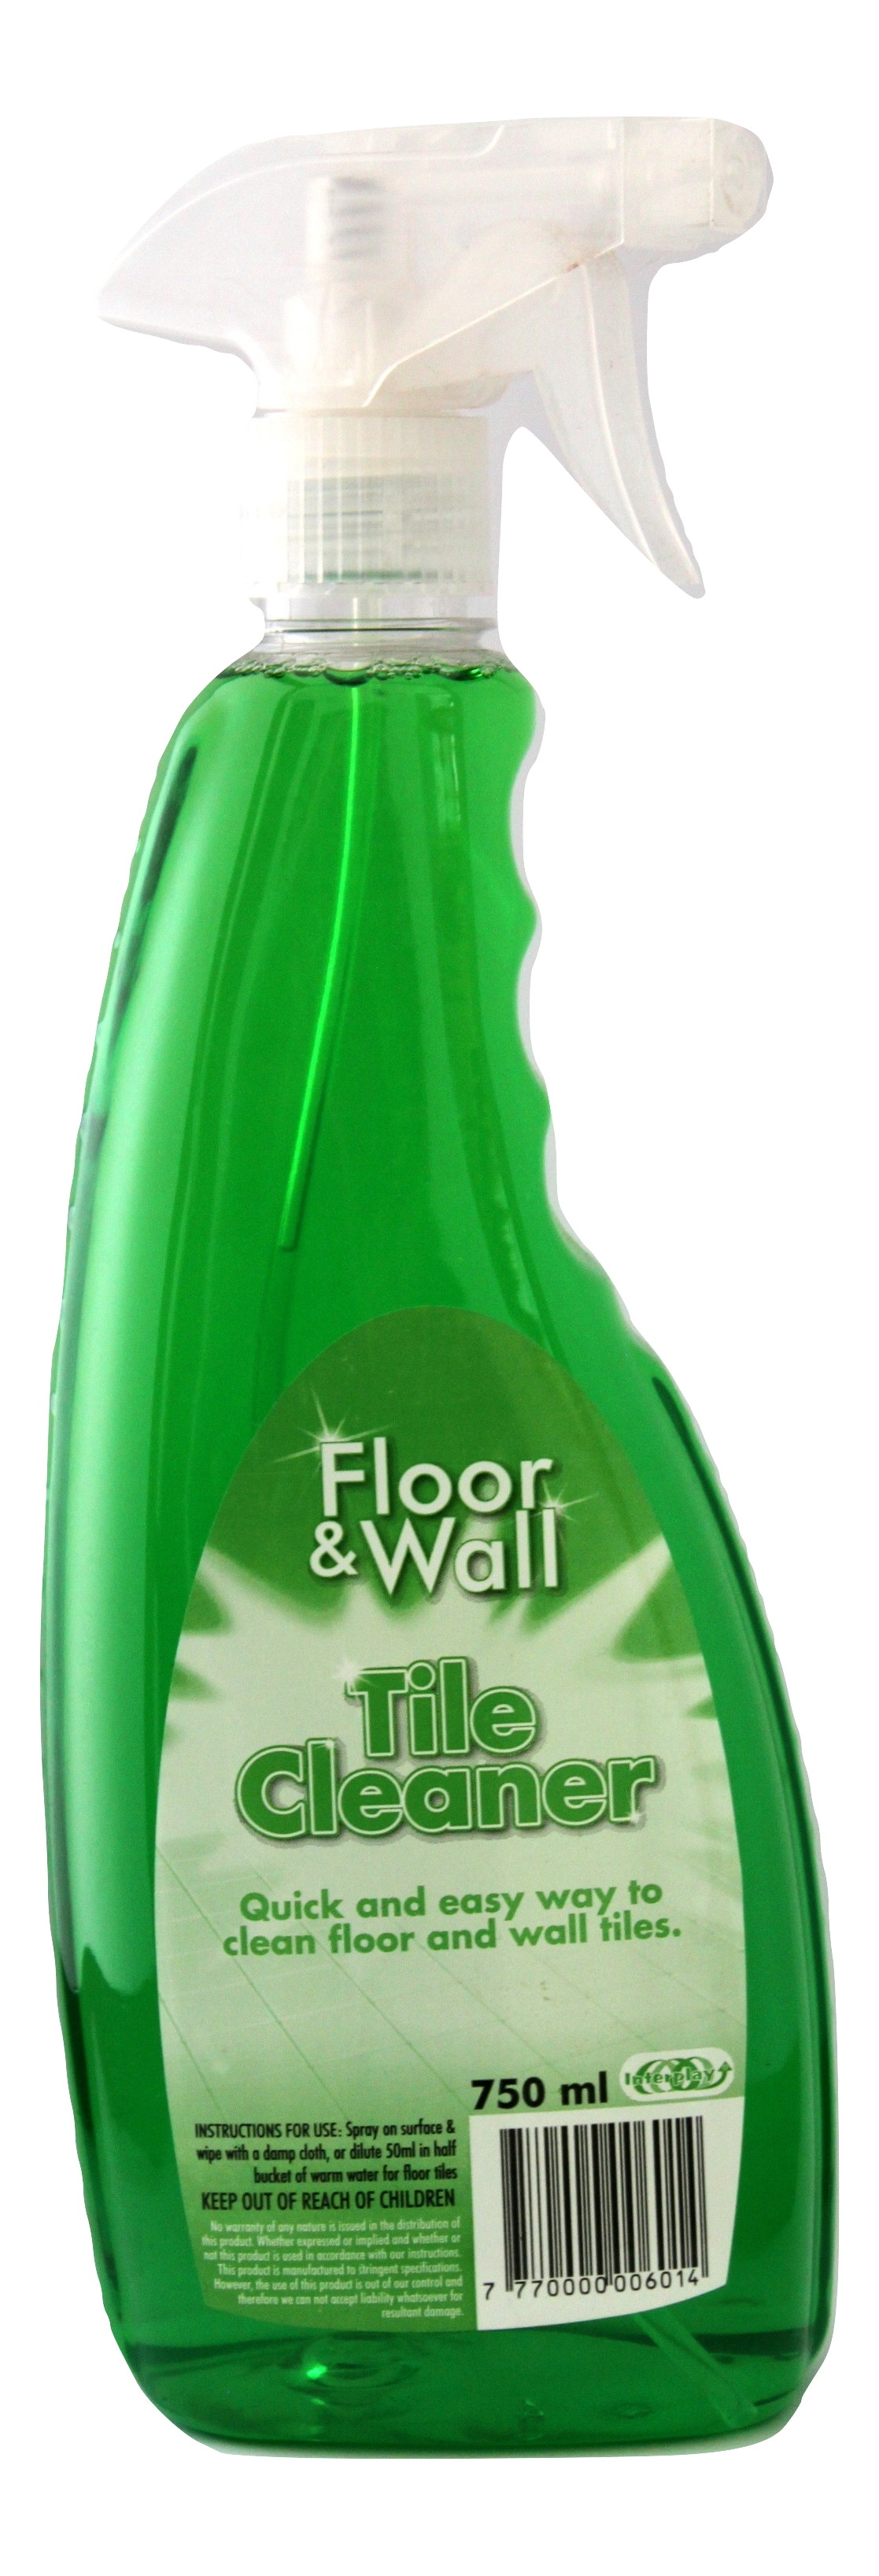 floor-wall-&-tile-cleaner